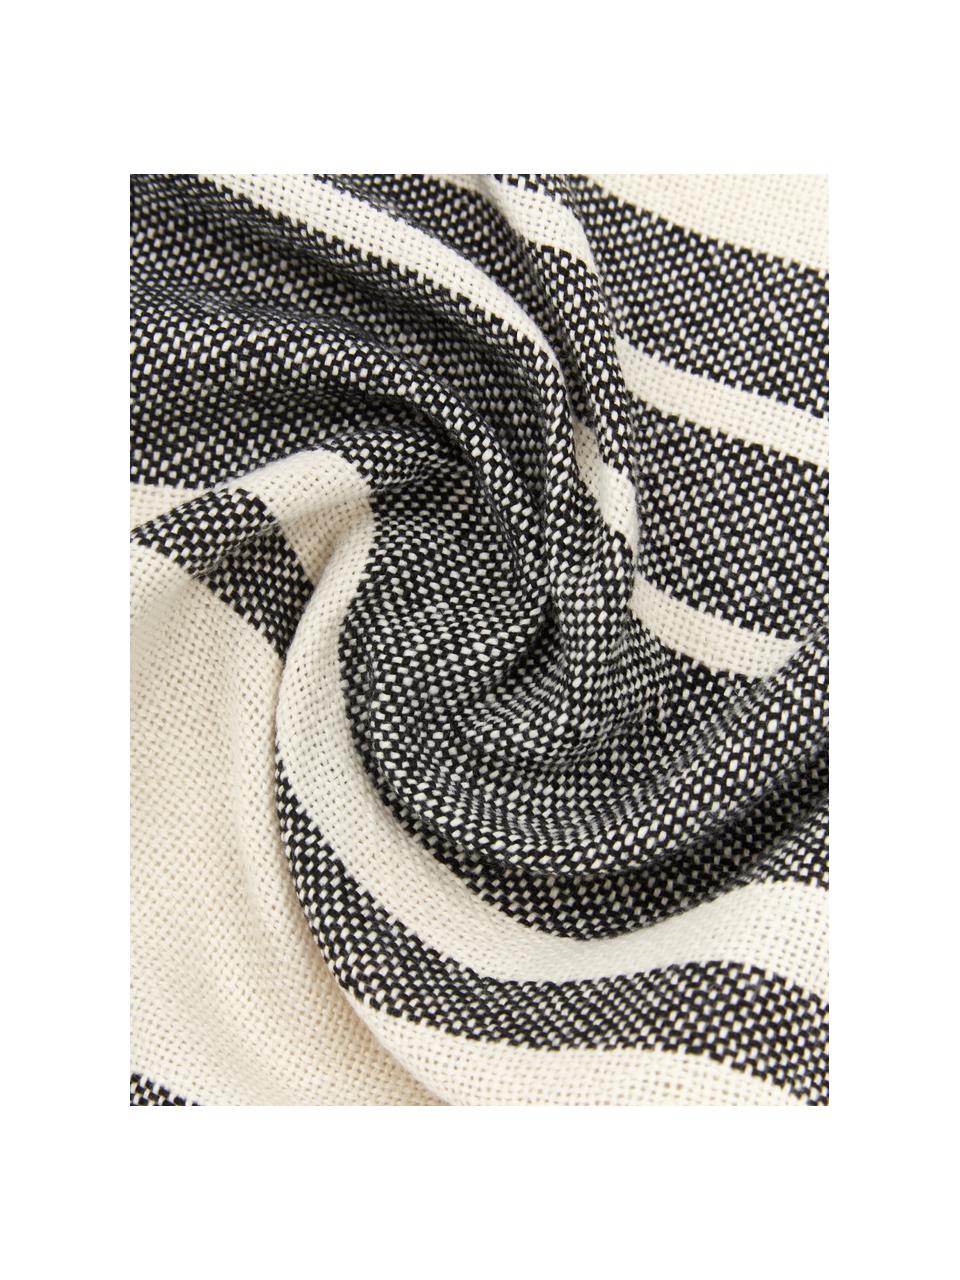 Plaid rayé en polyester recyclé Lines, 100% polyester recyclé, certifié GRS (Global Recycled Standard), Noir & blanc, rayé, larg. 130 x long. 170 cm